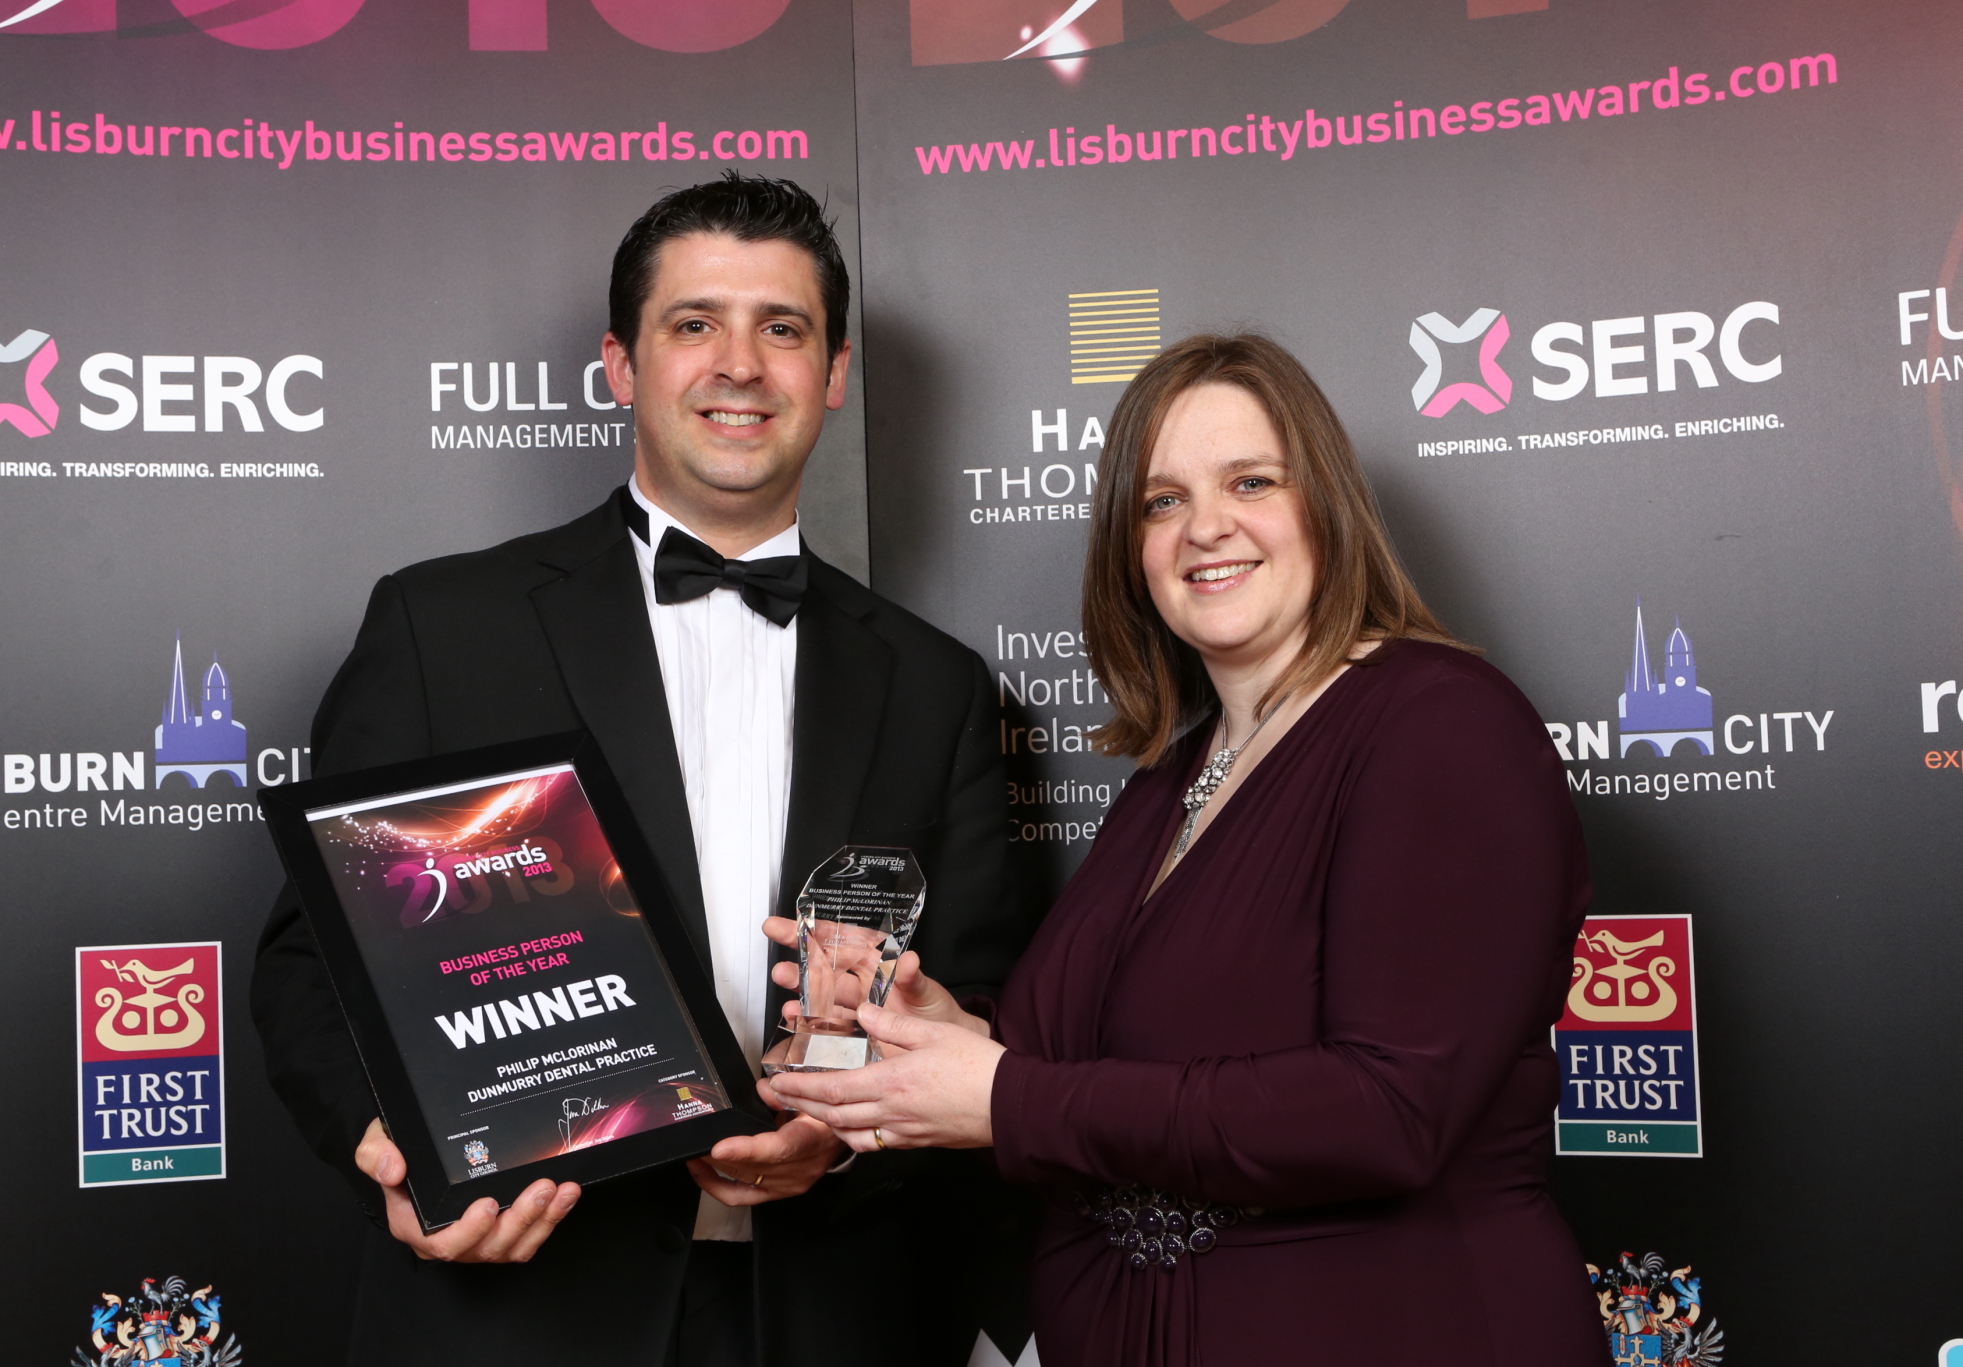 Business awards celebrate the best of Lisburn